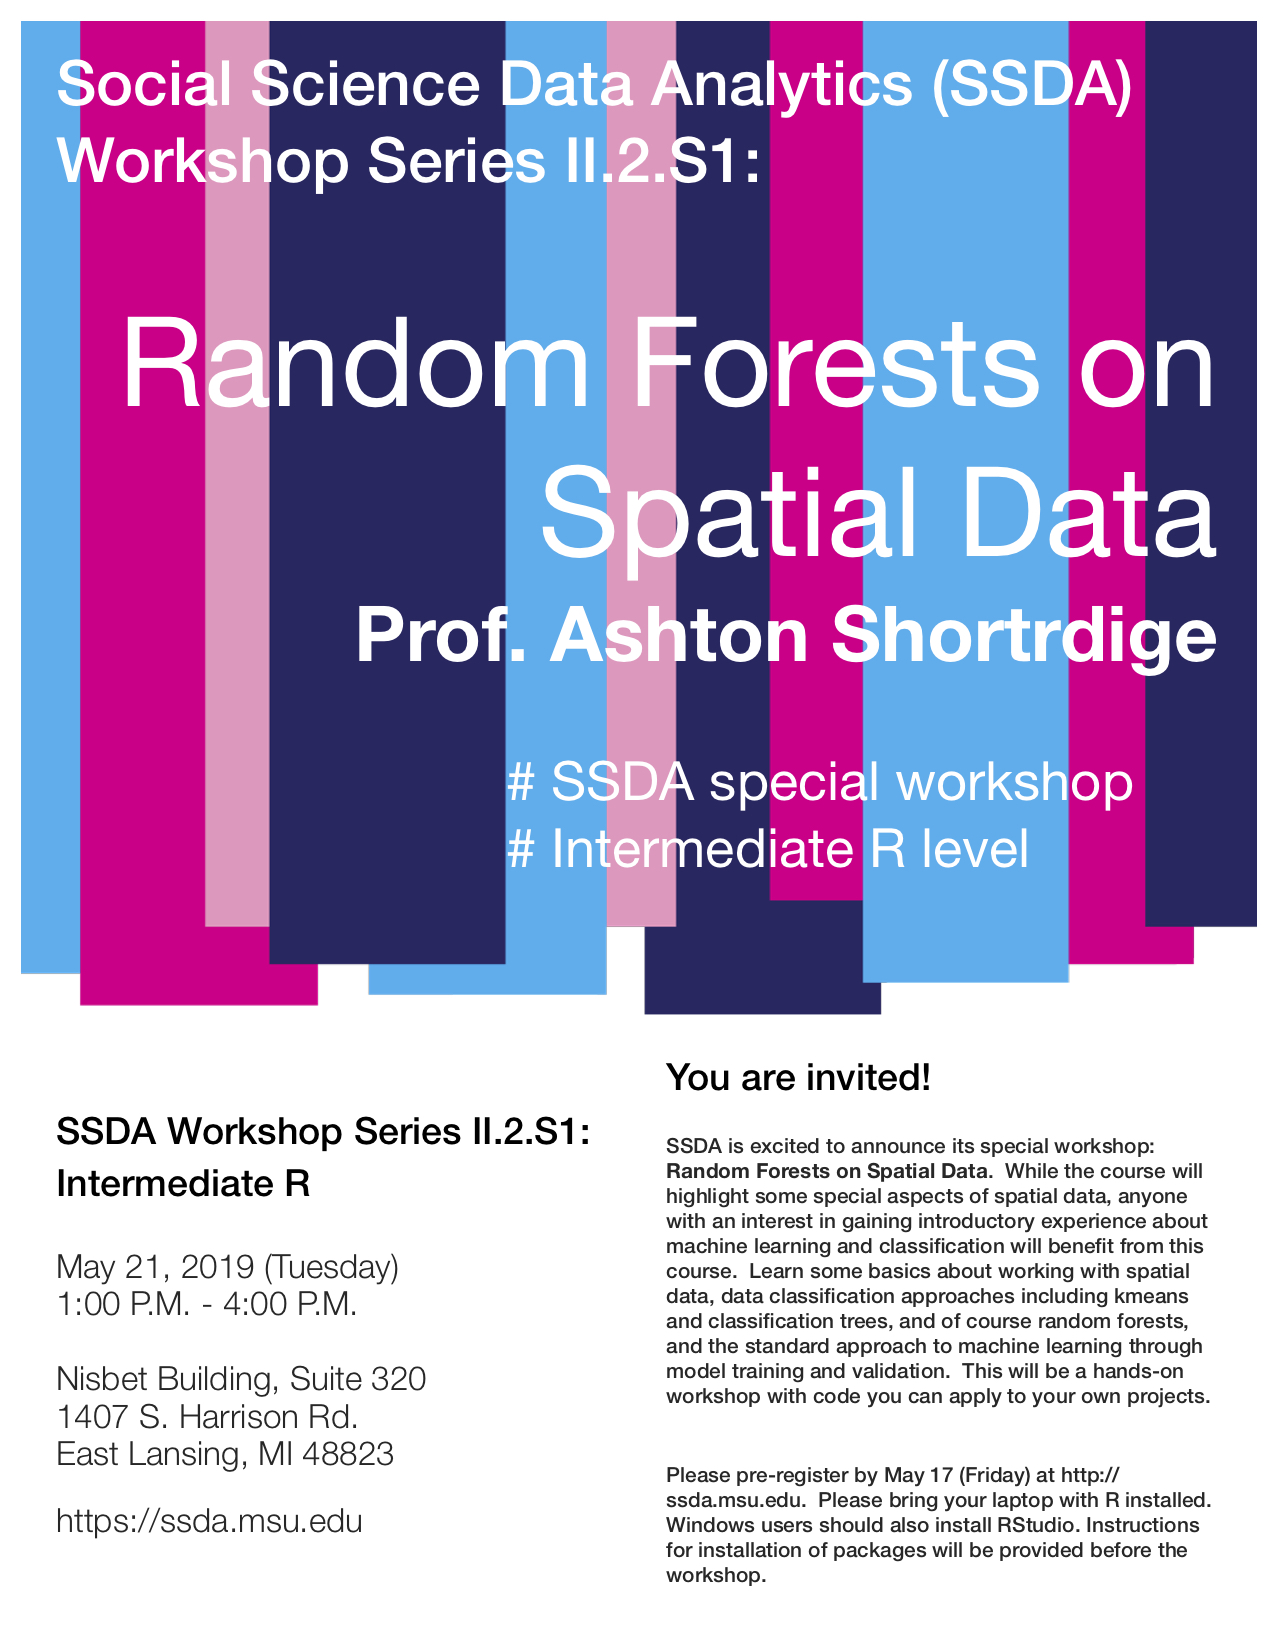 SSDA workshop flyer -- Random Forests on Spatial Data